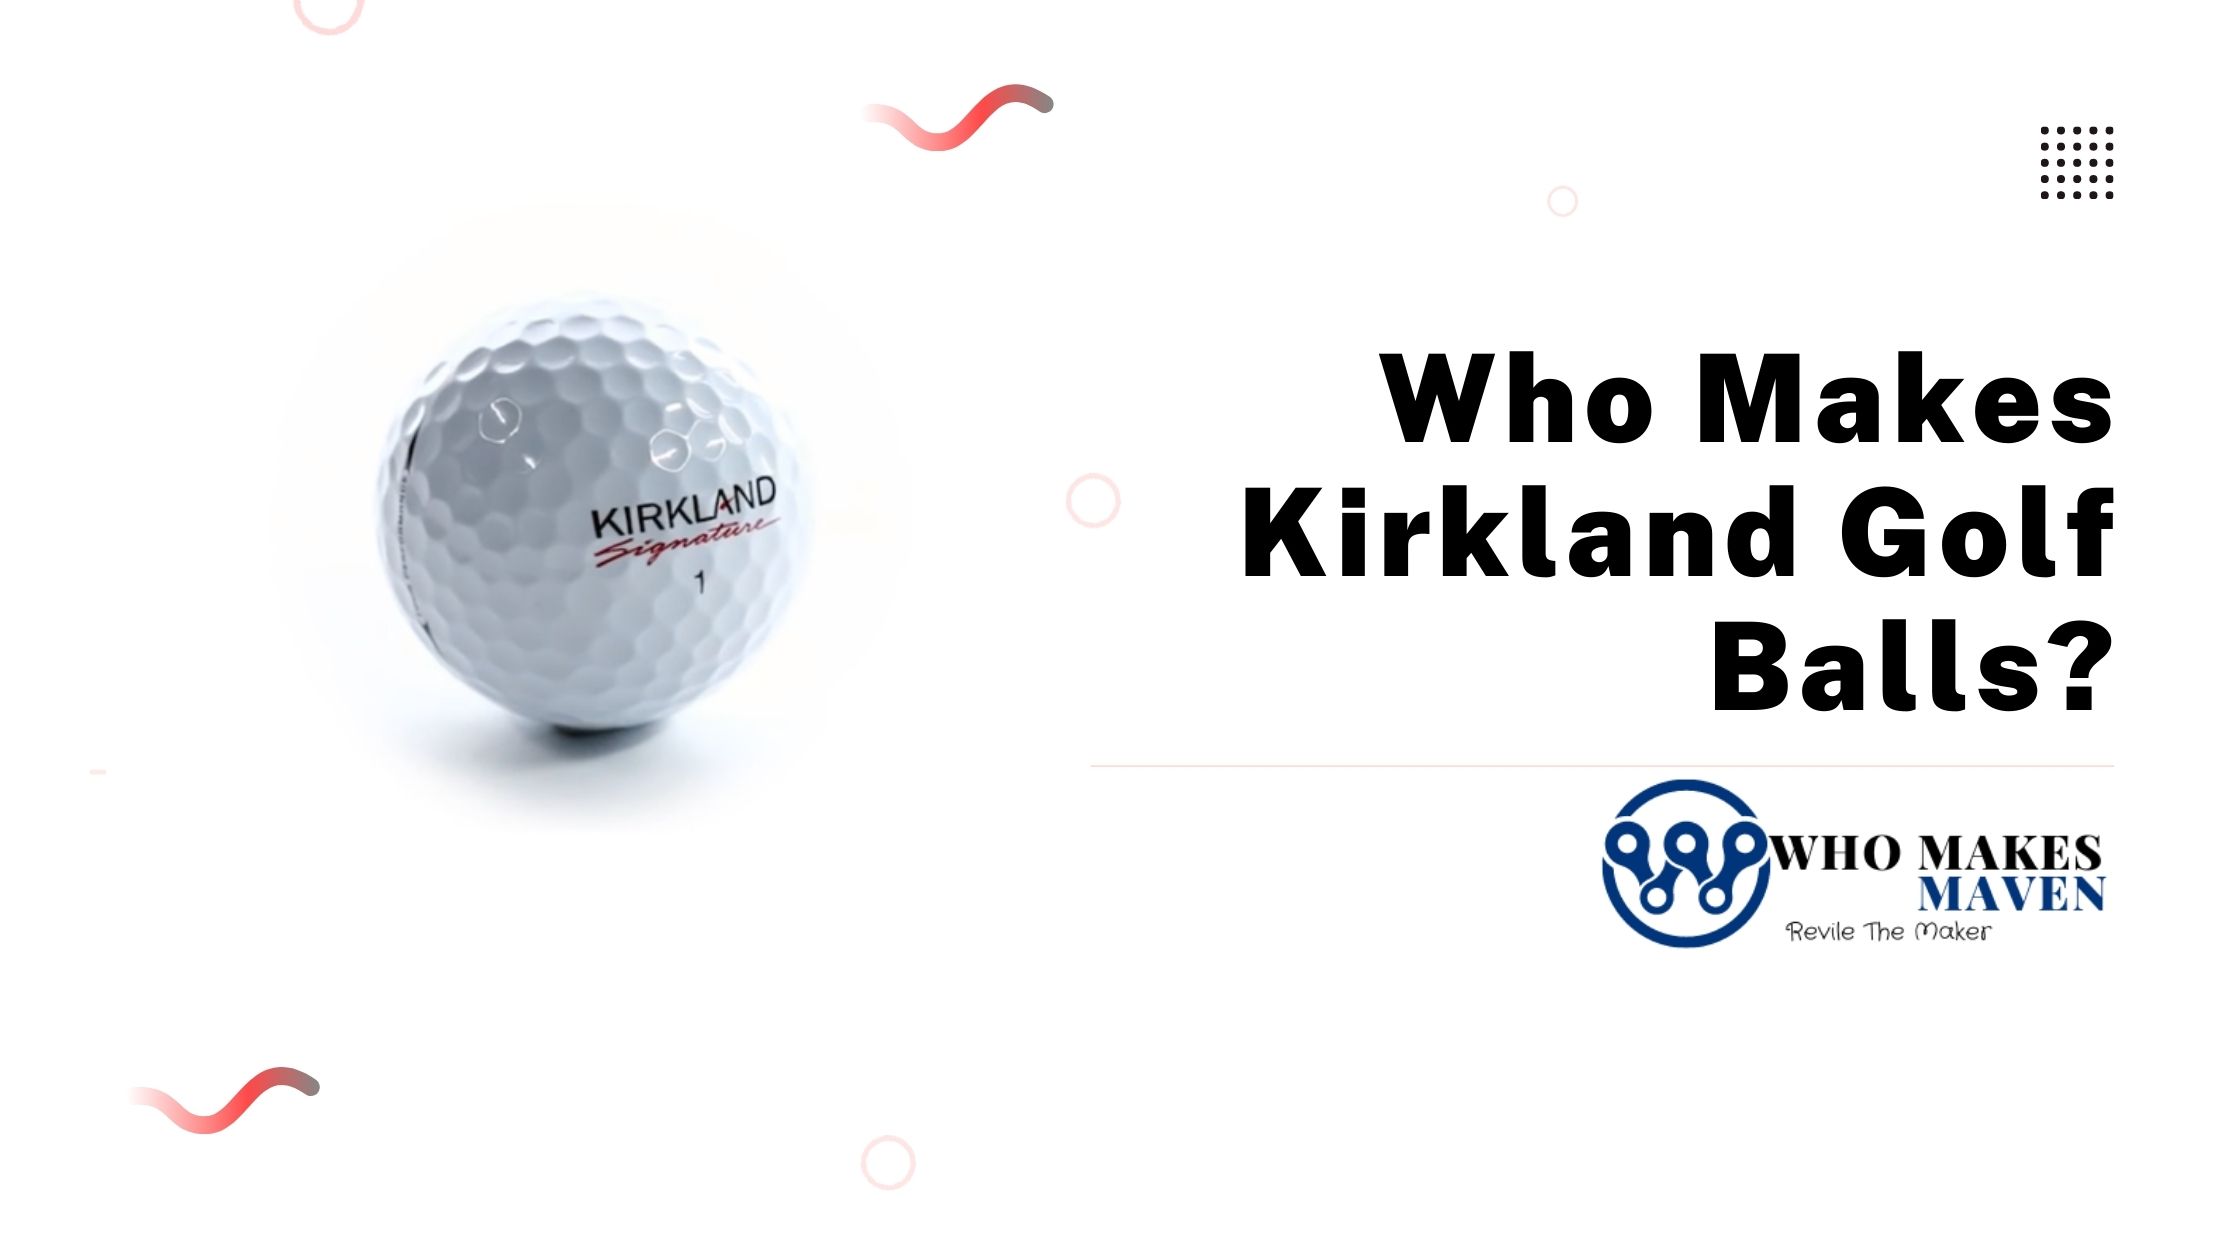 Who Makes Kirkland Golf Balls?